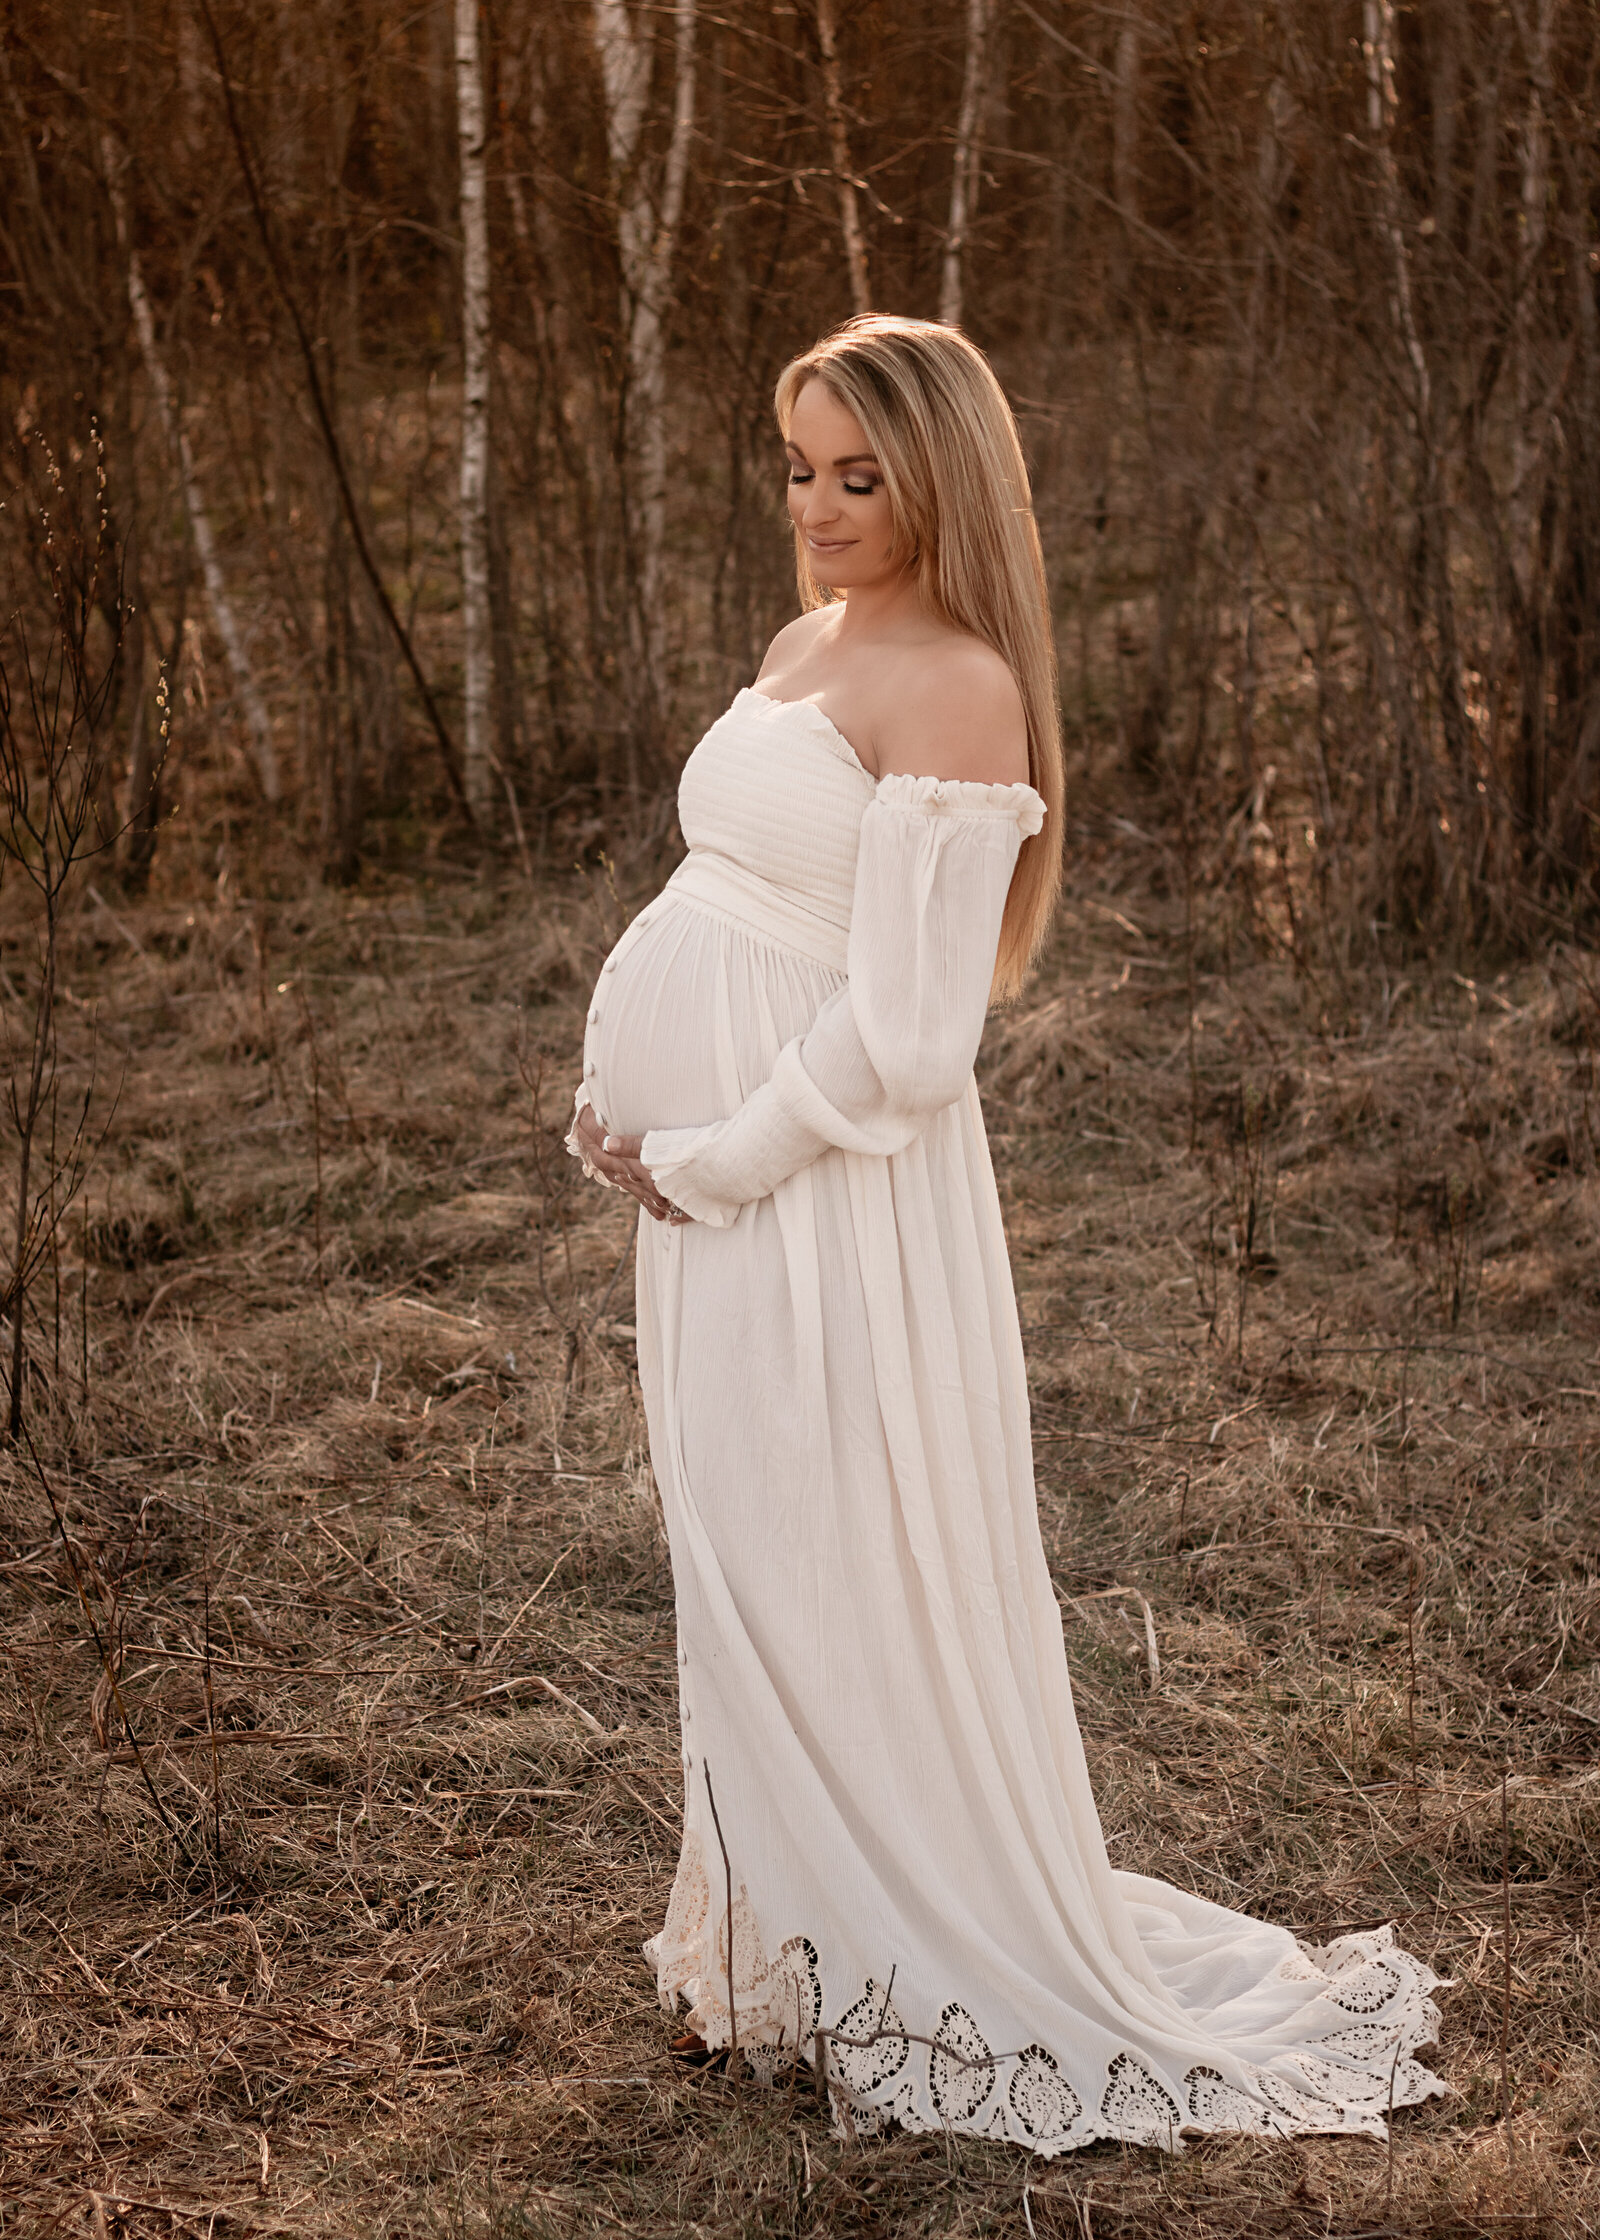 Minneapolis Maternity Photography - Amanda Nicholle Photography